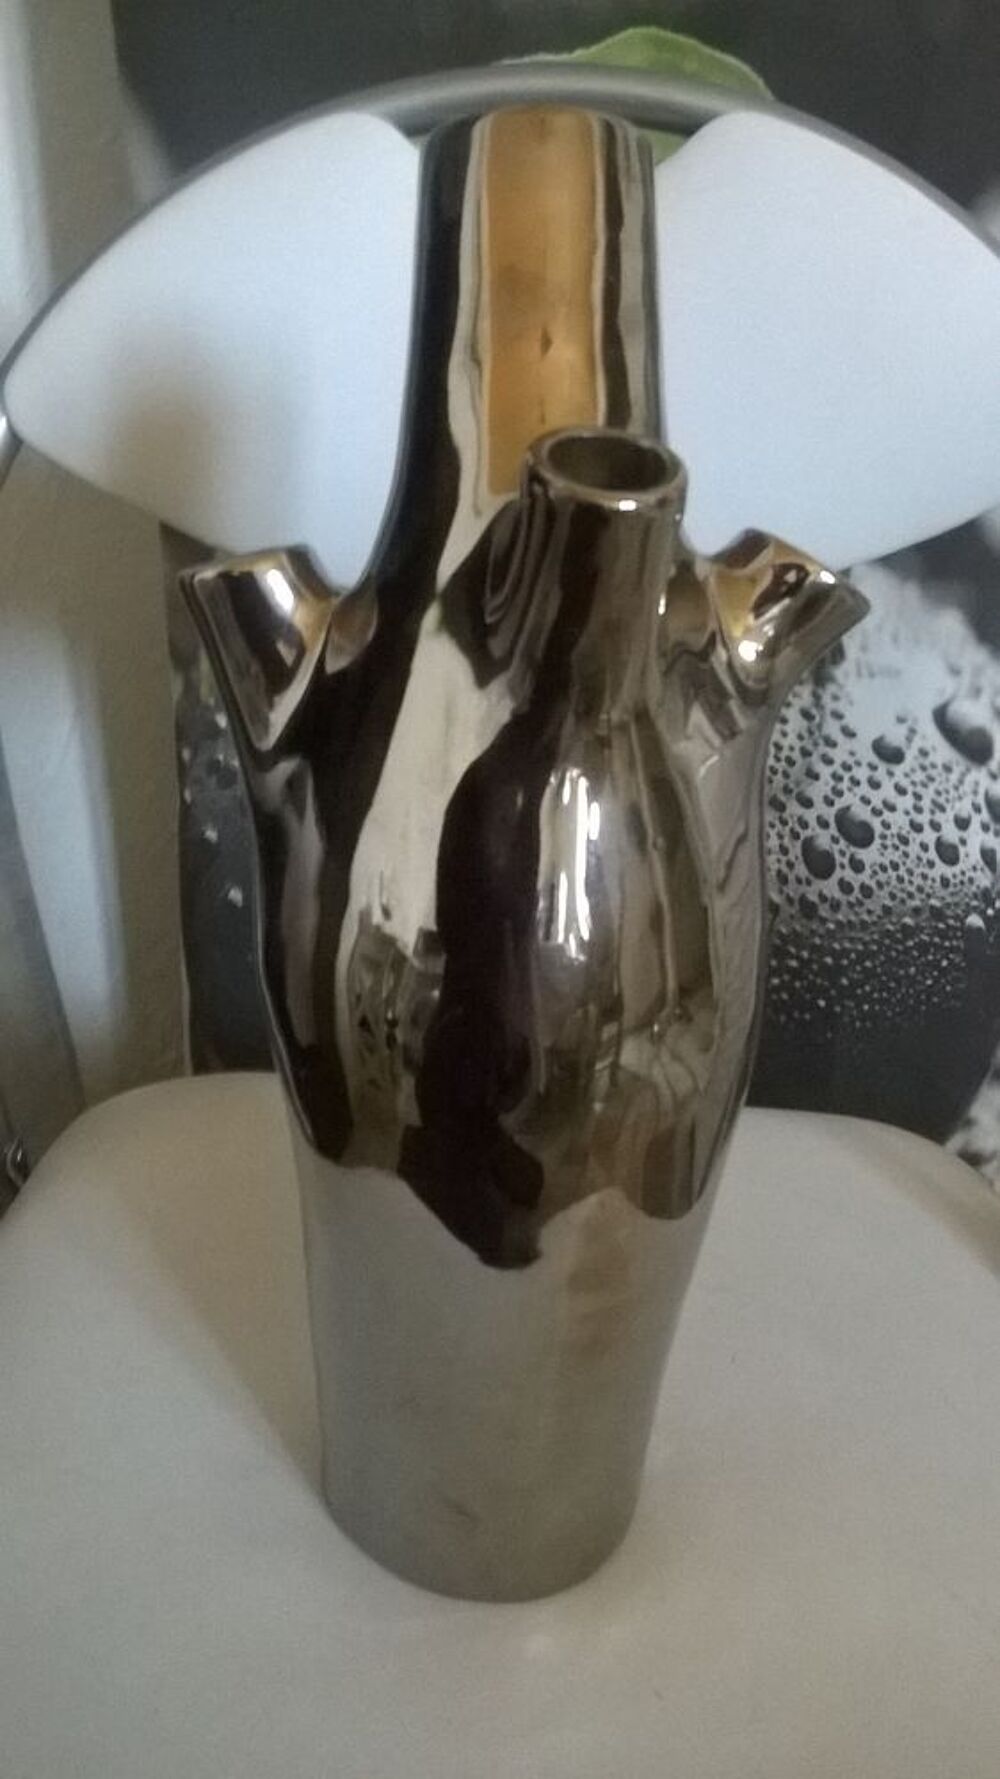 Grand vase argente Design
4 fleurs
Tampons antid&eacute;rapants
Dcoration